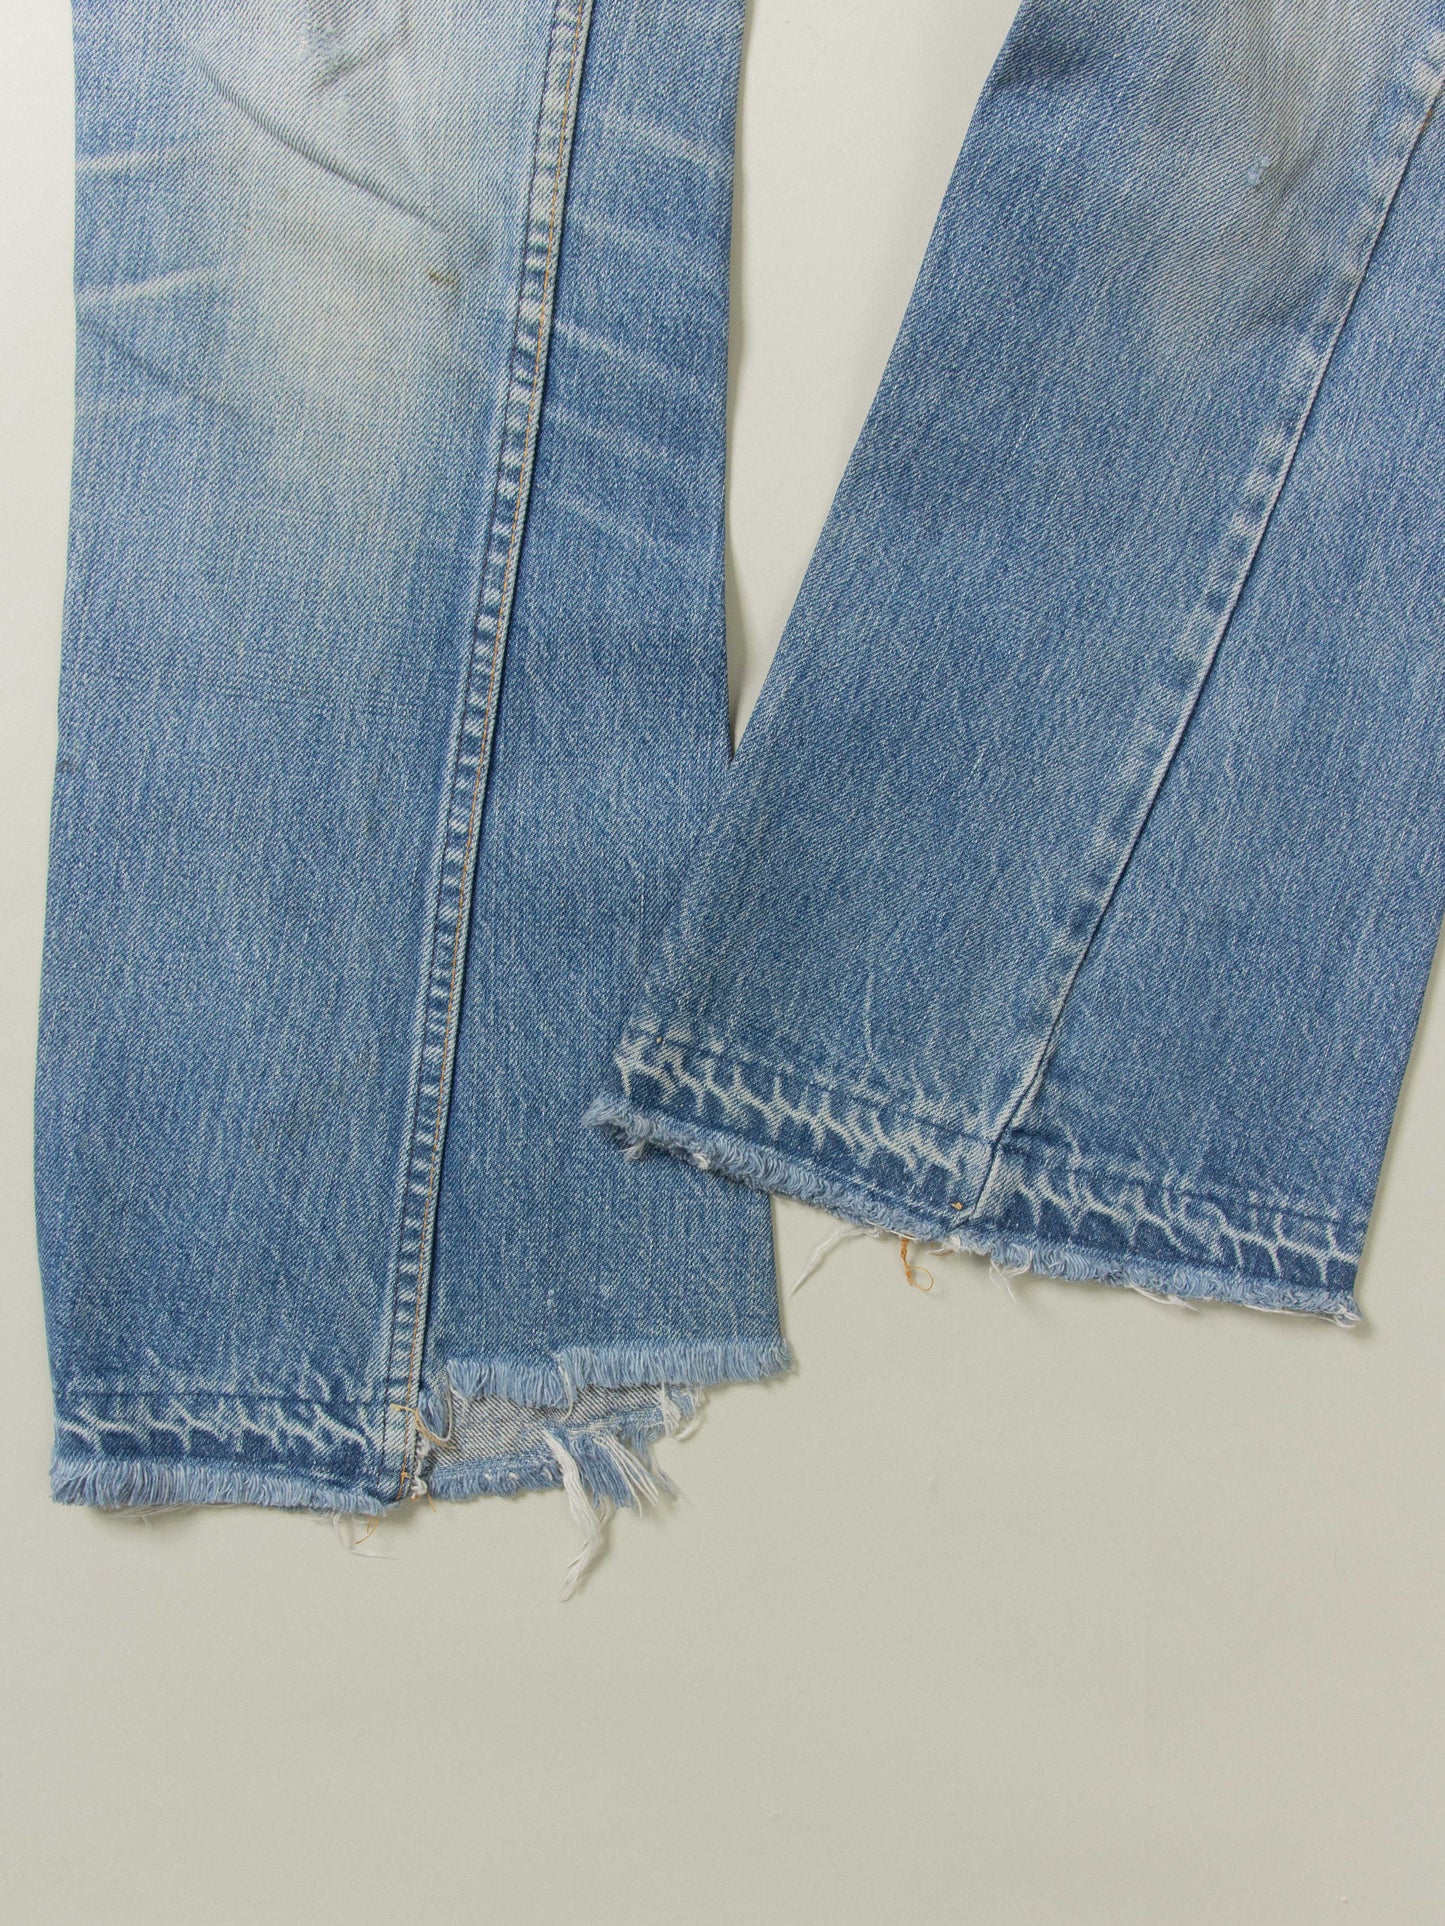 Vtg Late 1960s Levi's Big E Orange Tab Flared Jeans (28x30)